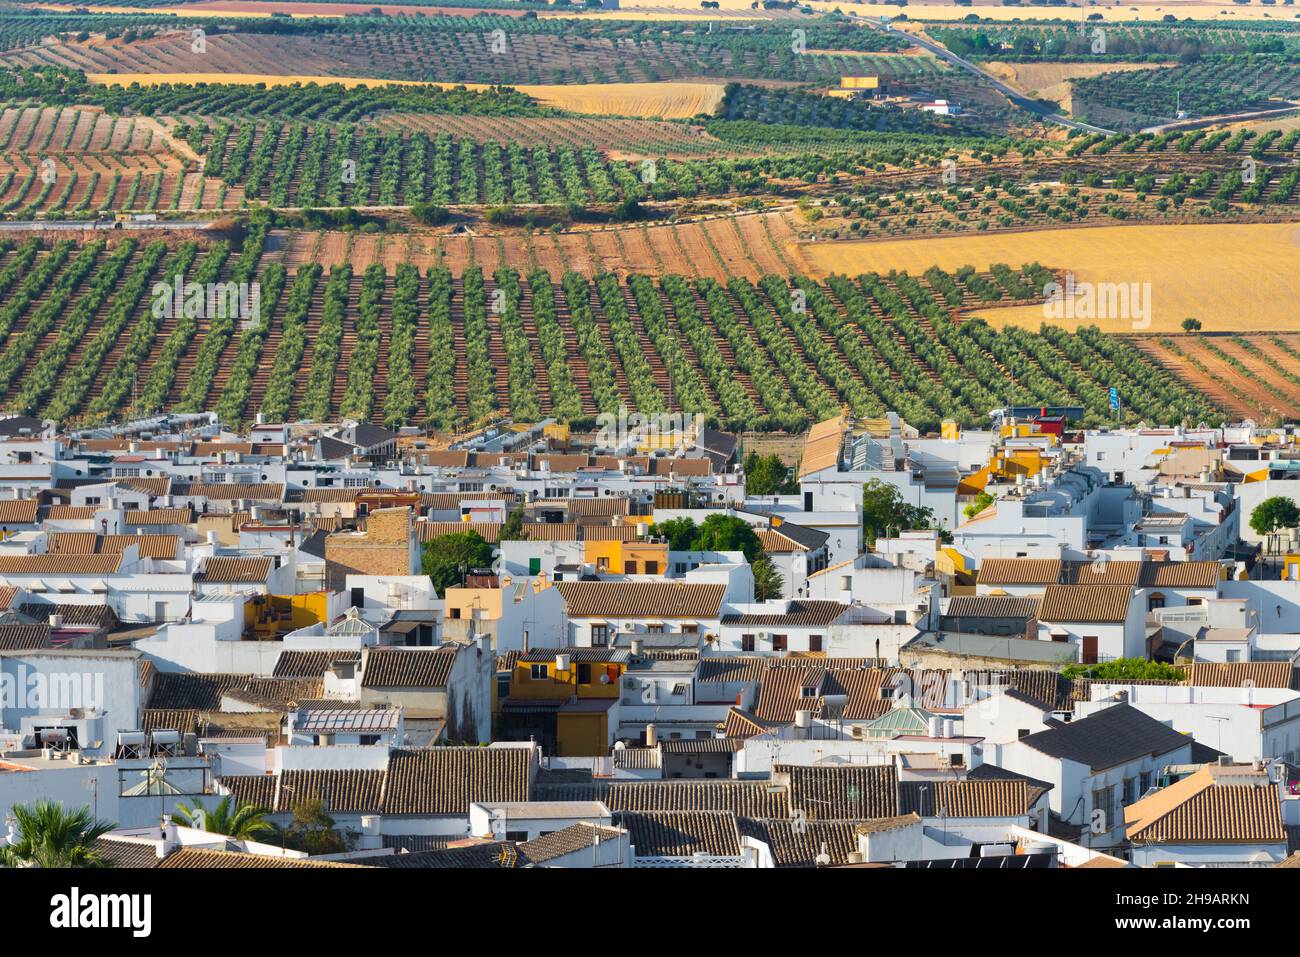 Cityscape of Osuna, houses and olive farm, Seville Province, Andalusia Autonomous Community, Spain Stock Photo